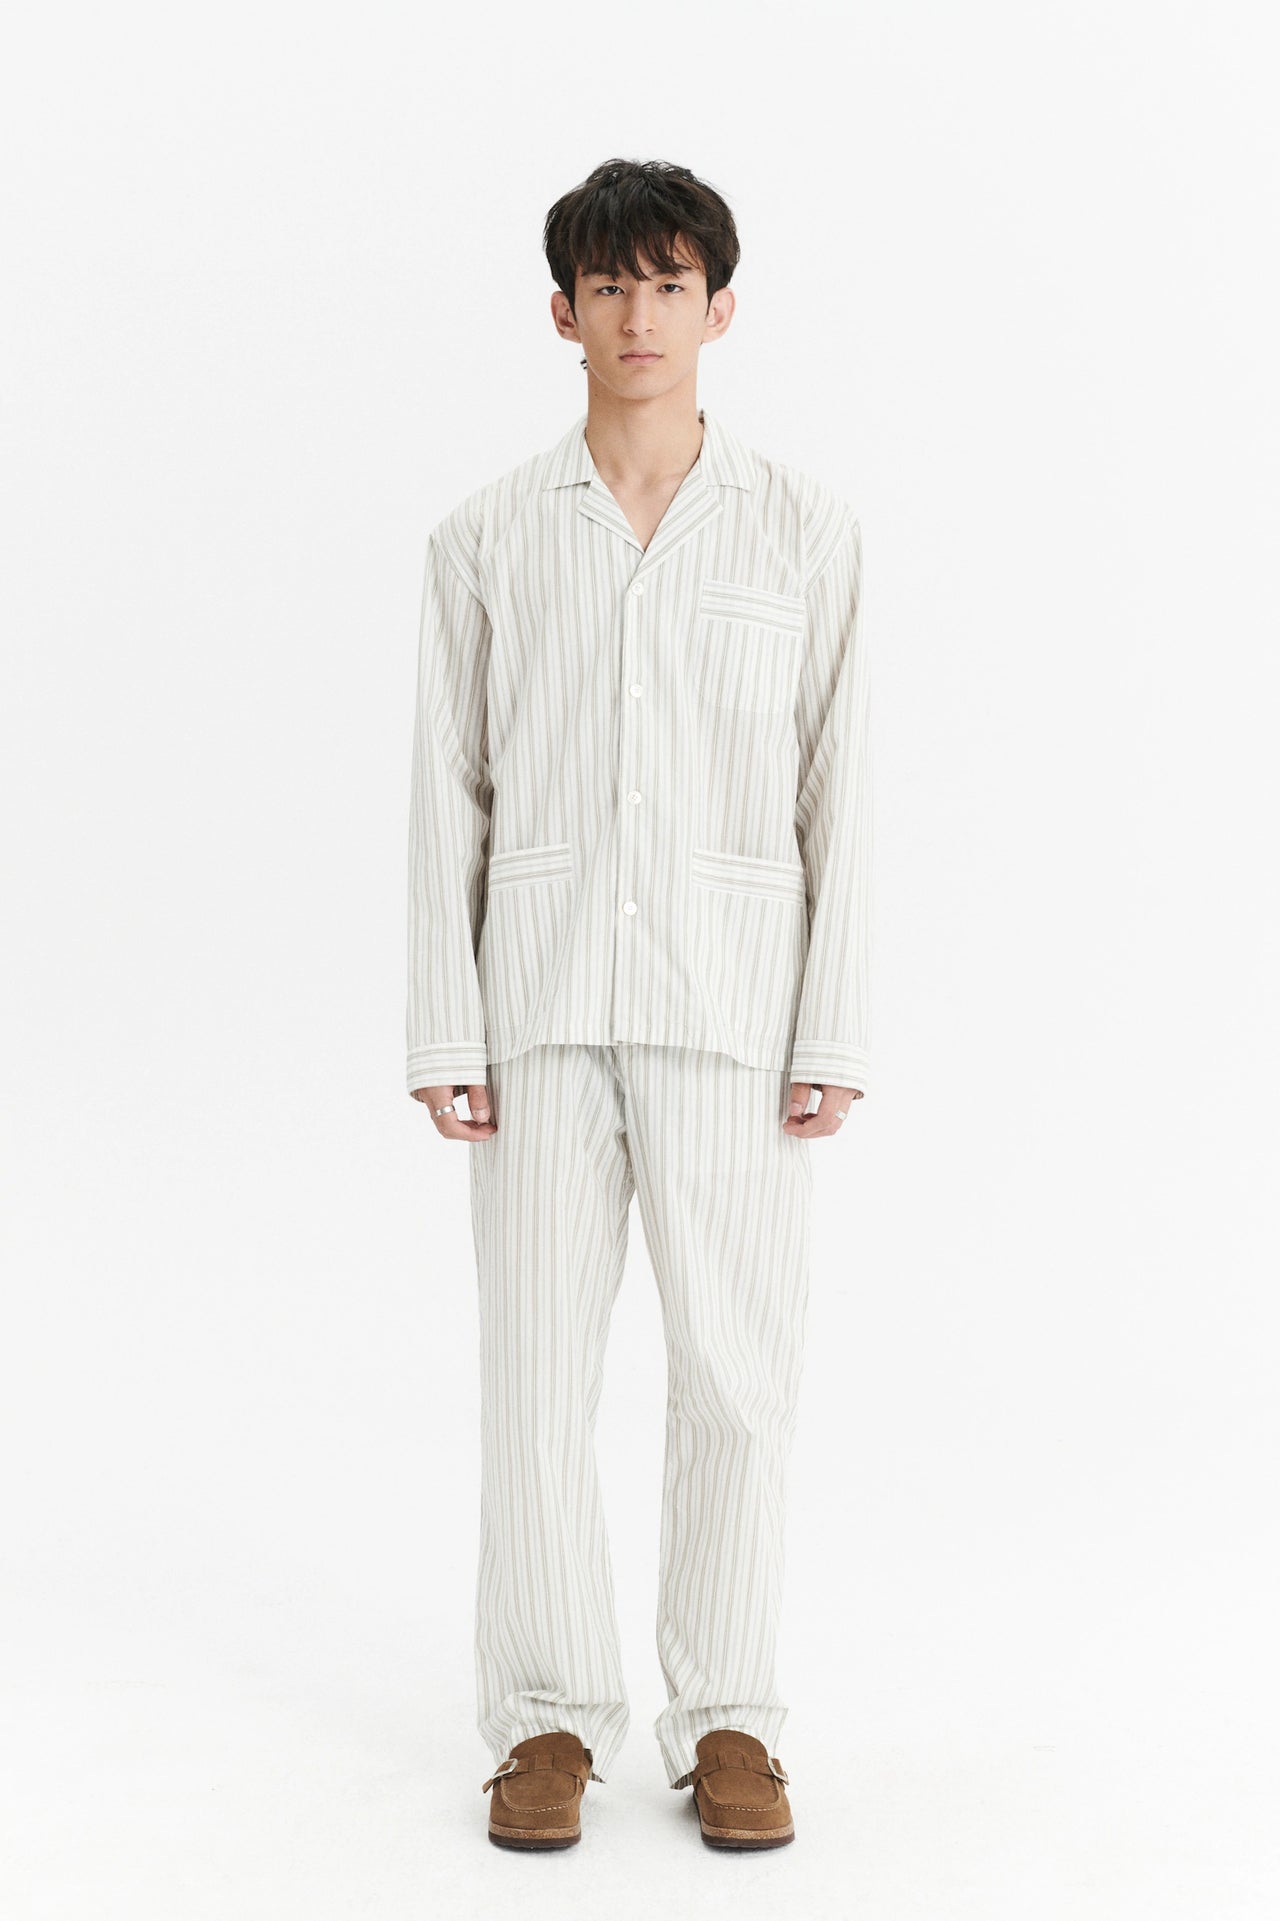 Pyjama House Shirt in a Cream and Beige Striped Italian Cotton by Leggiuno